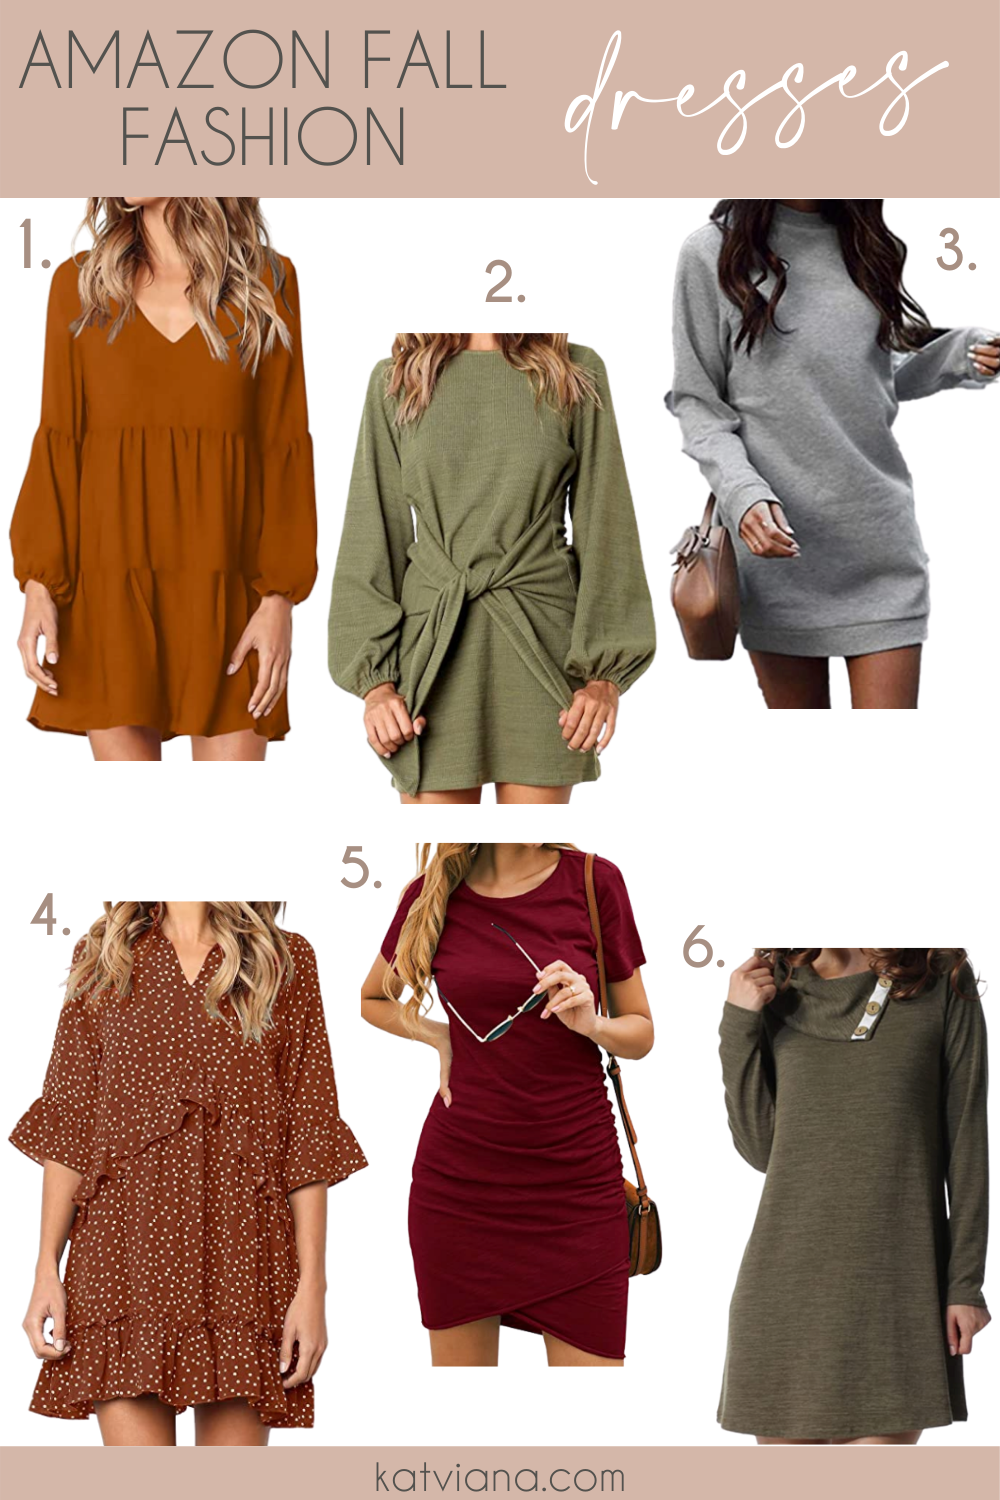 Amazon Fall Fashion - Dresses | Kat Viana